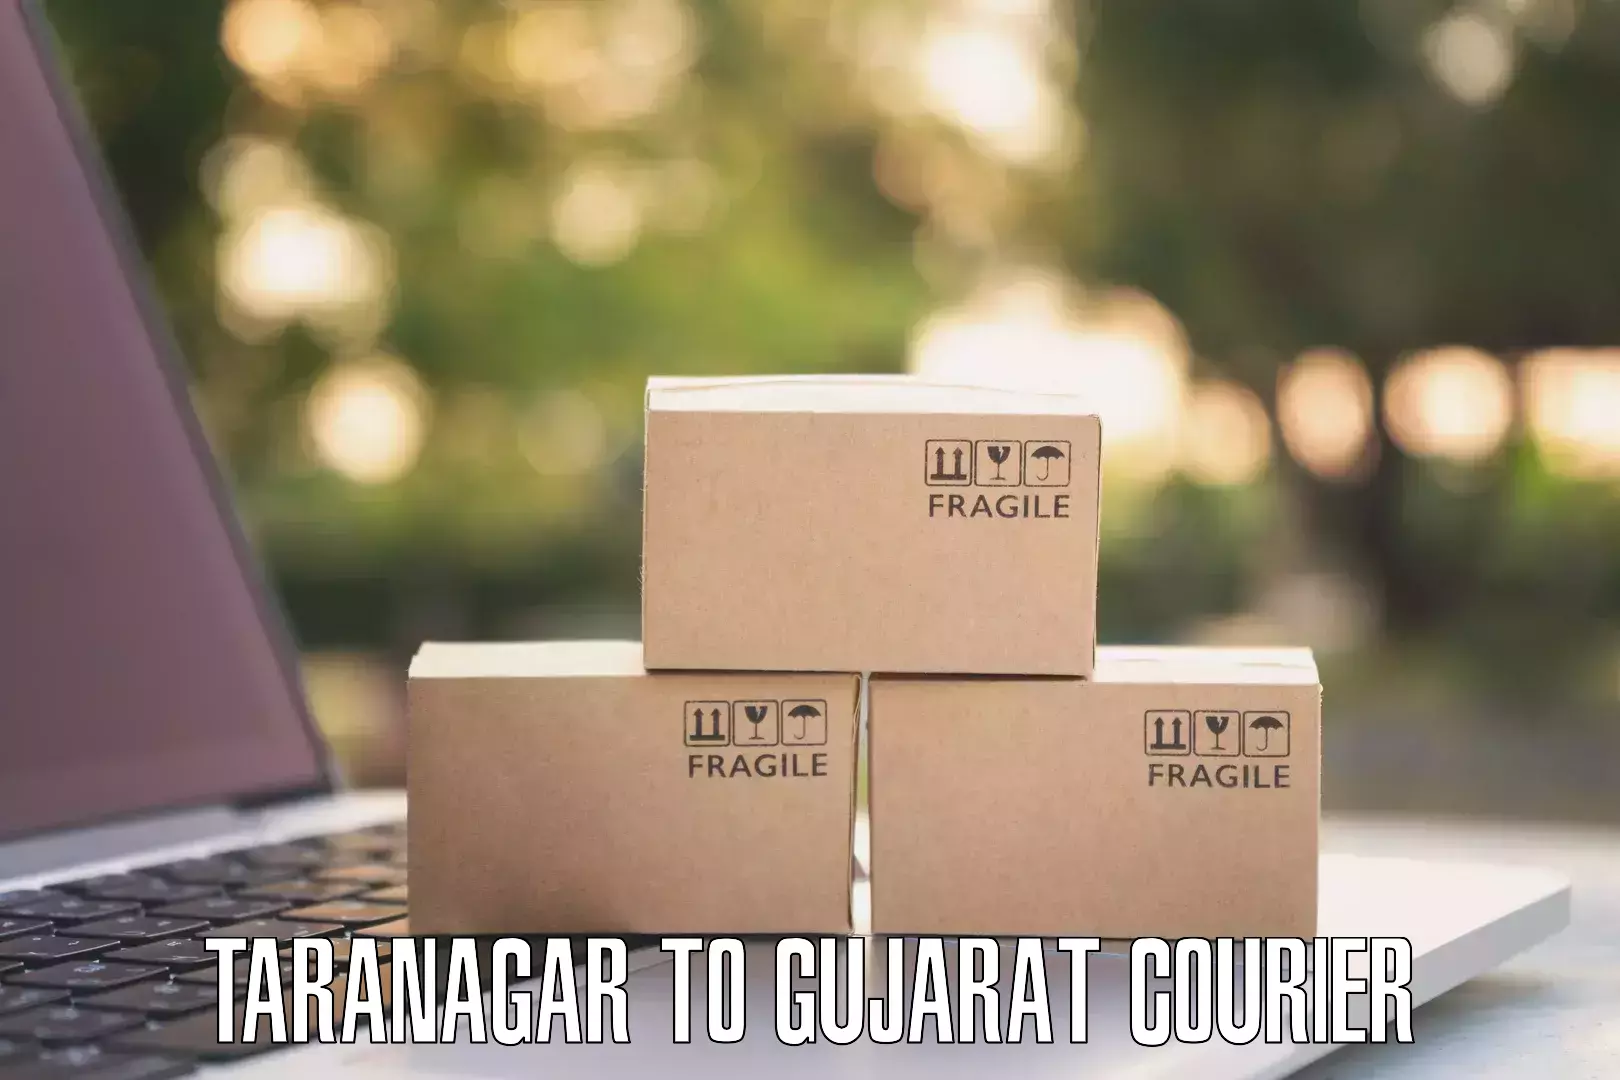 Quality courier partnerships Taranagar to Girgadhada